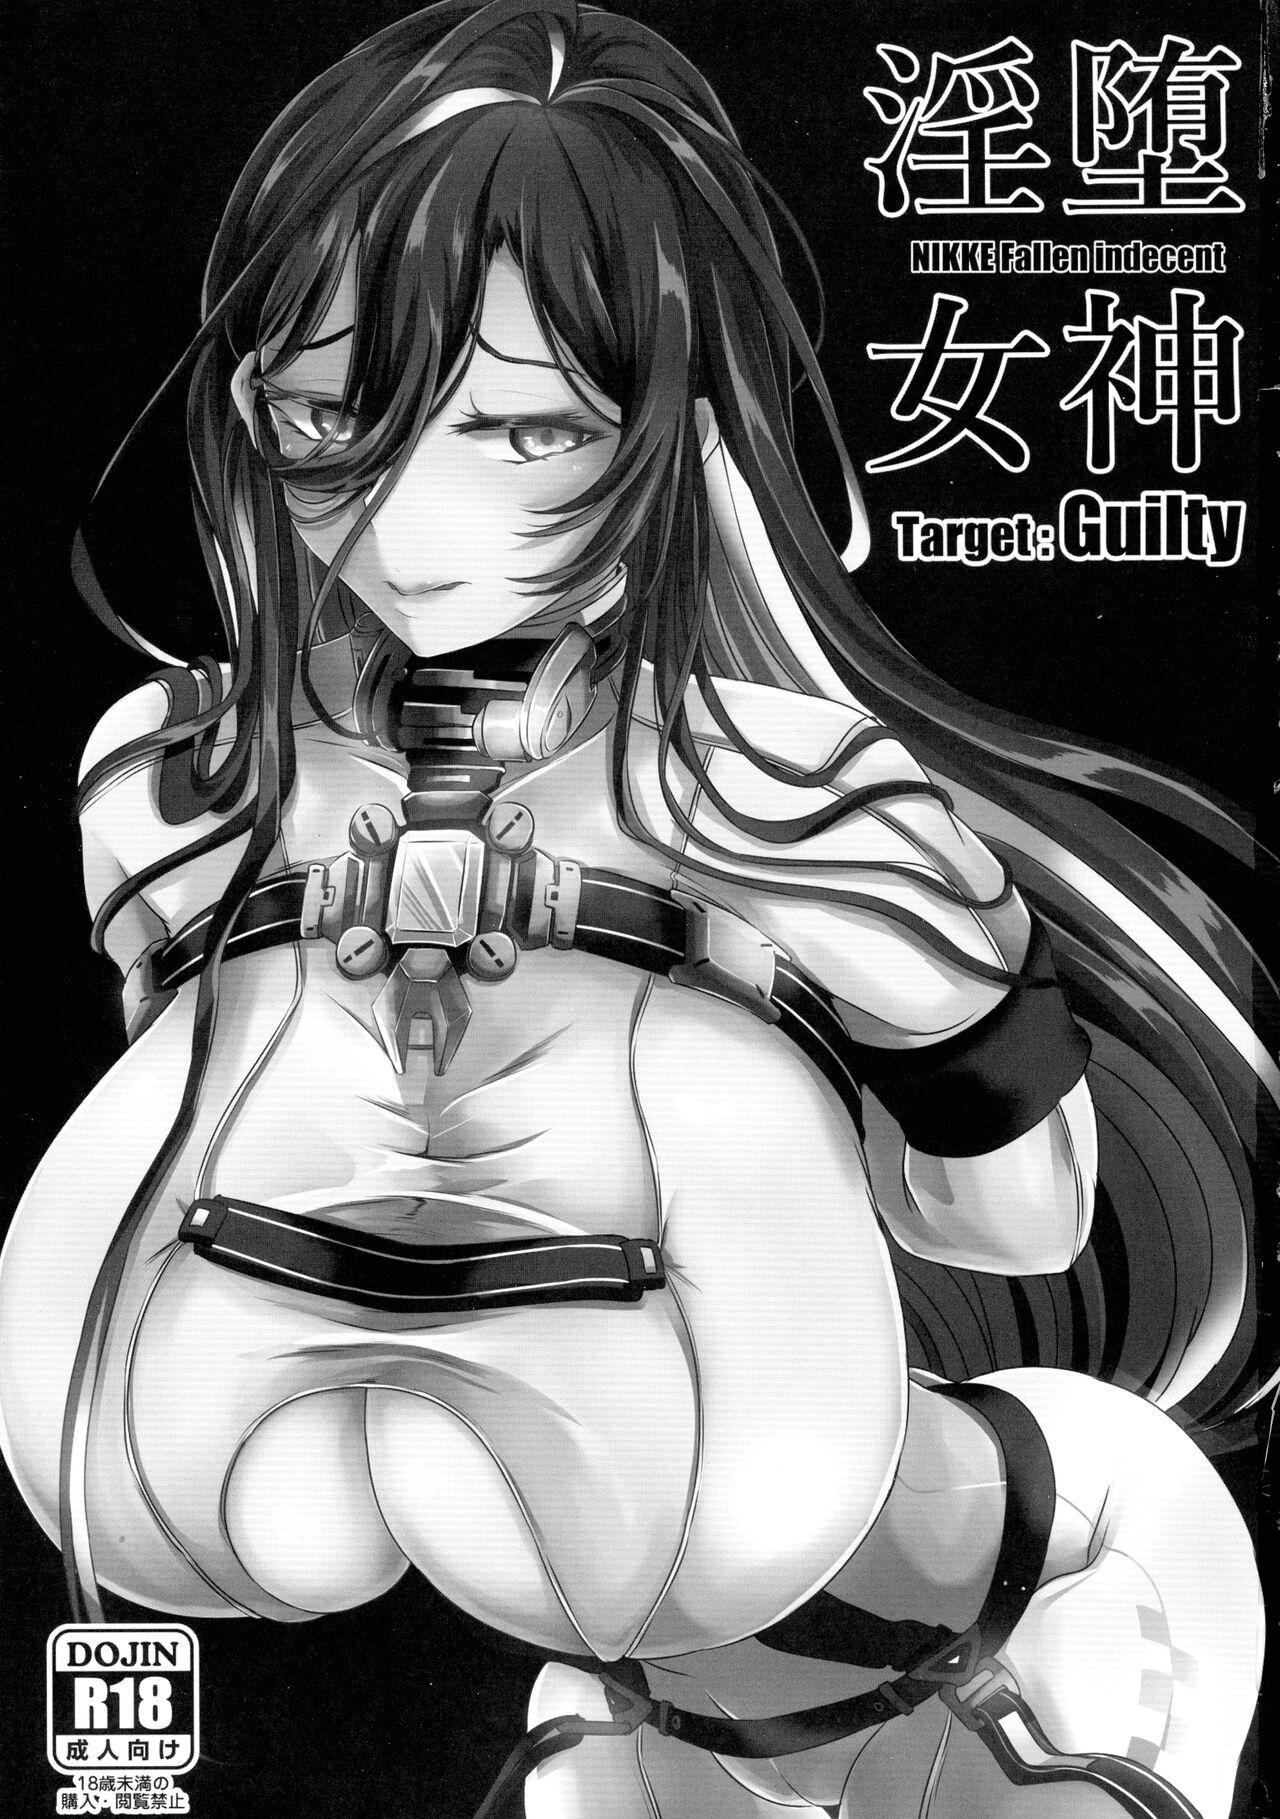 Anal Sex Nikke Fallen Indecent Target: Guilty - Goddess of victory nikke Family Roleplay - Picture 3